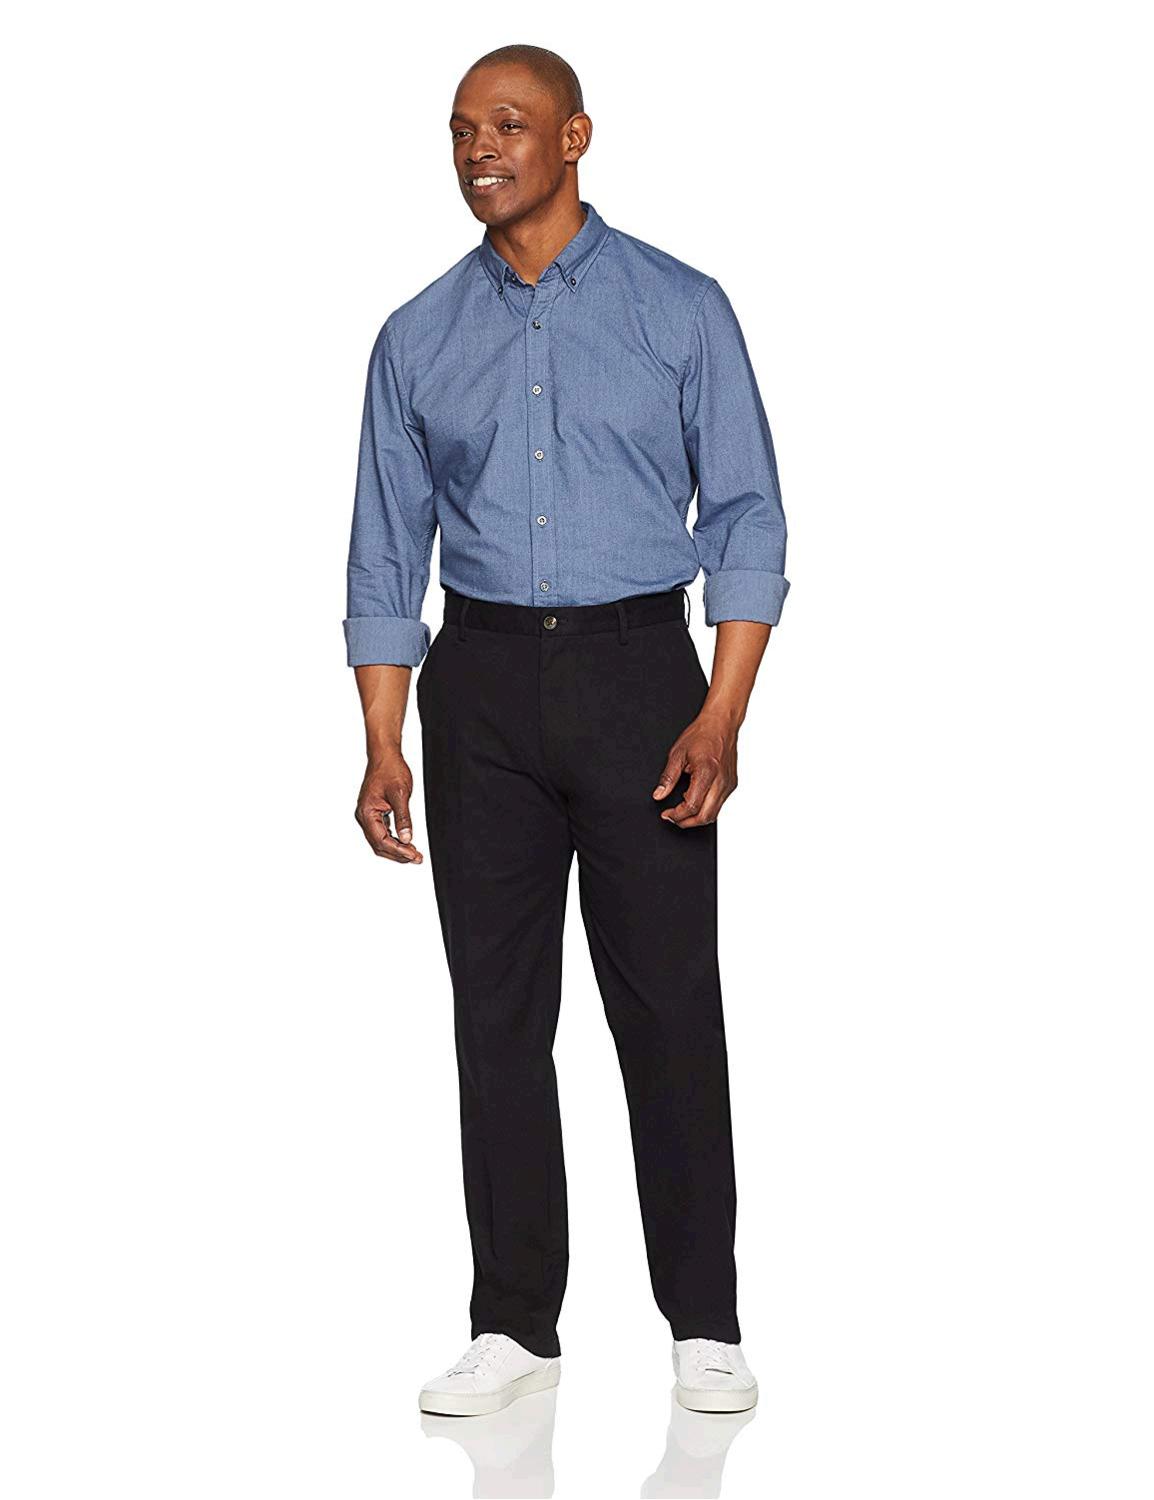 Essentials Men's Classic-Fit, True Black, Size 30W x 32L 7gC3 | eBay